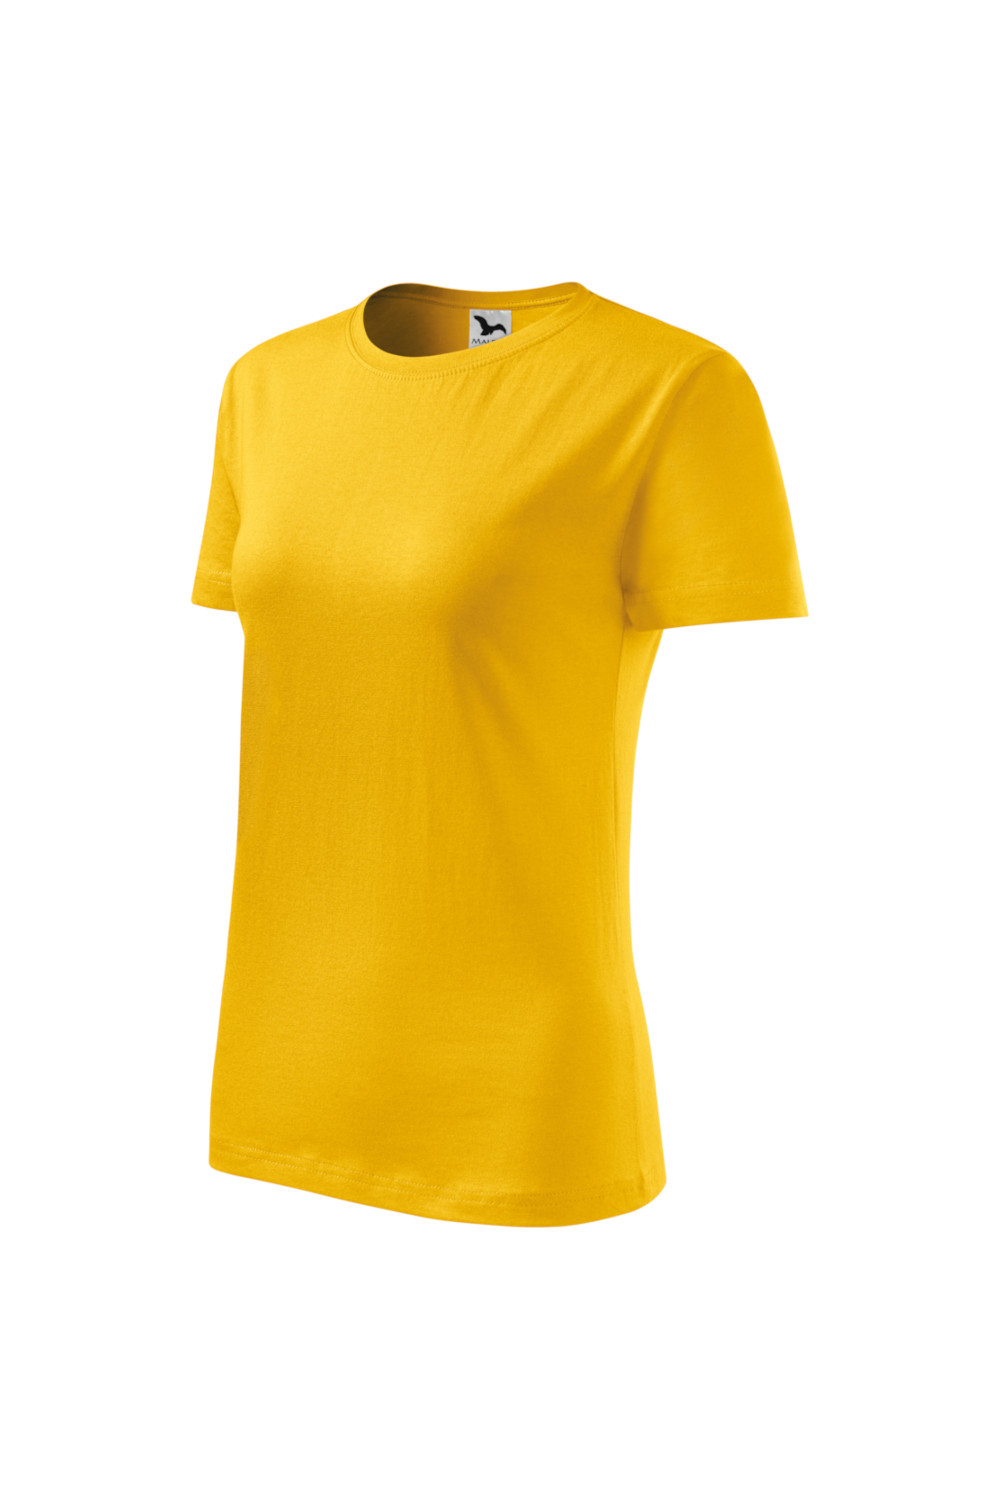 CLASSIC 133 MALFINI Koszulka damska 100% bawełna t-shirt limonka